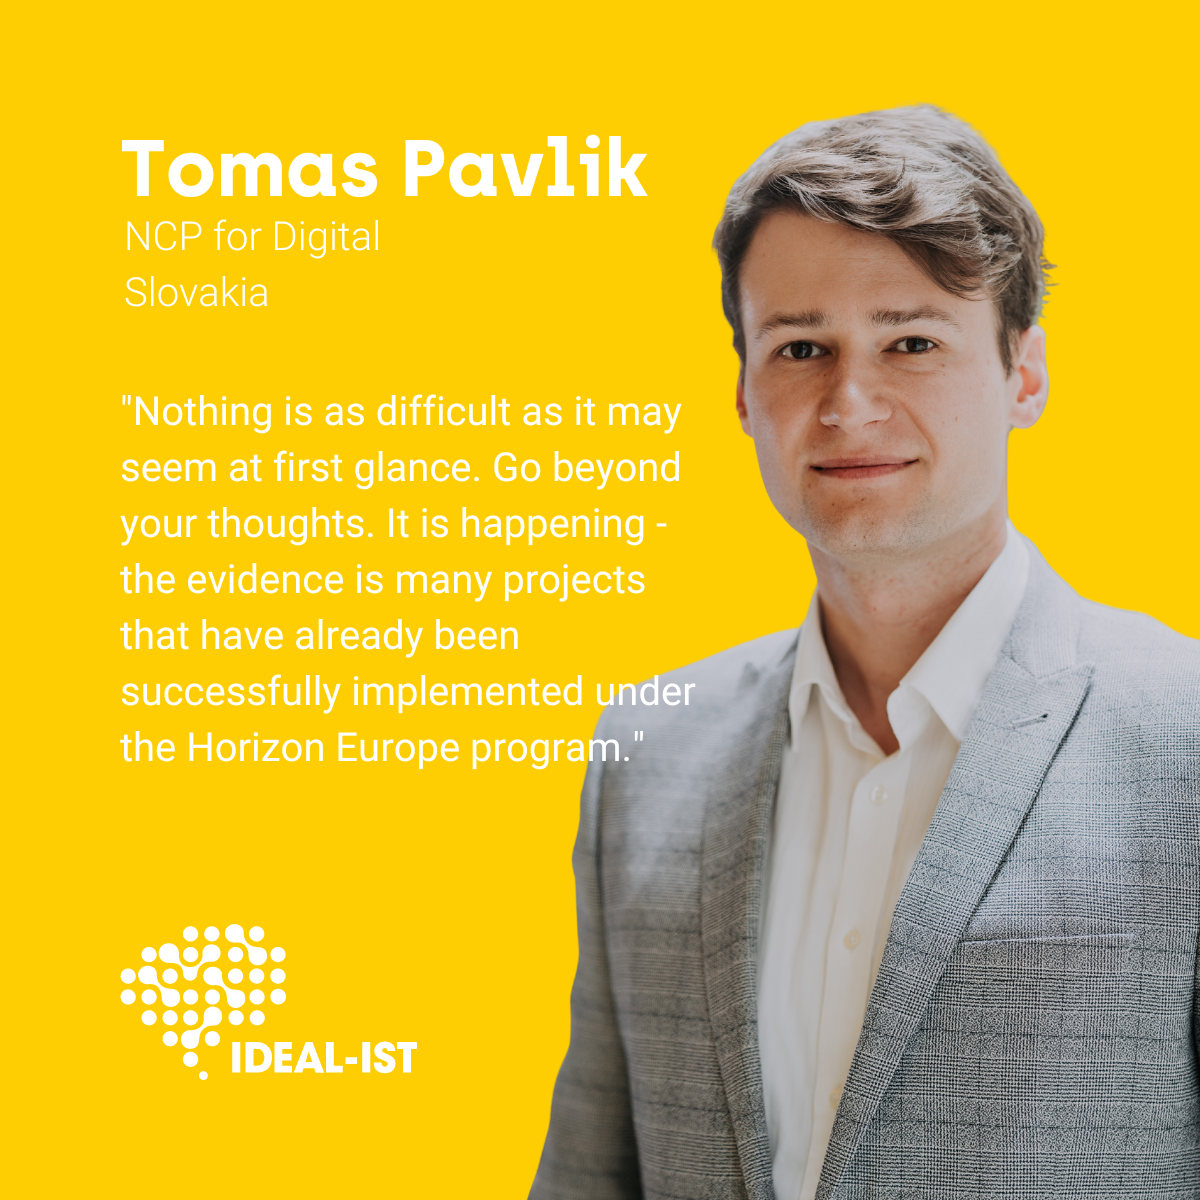 Interview from Tomas Pavlik, Slovakia